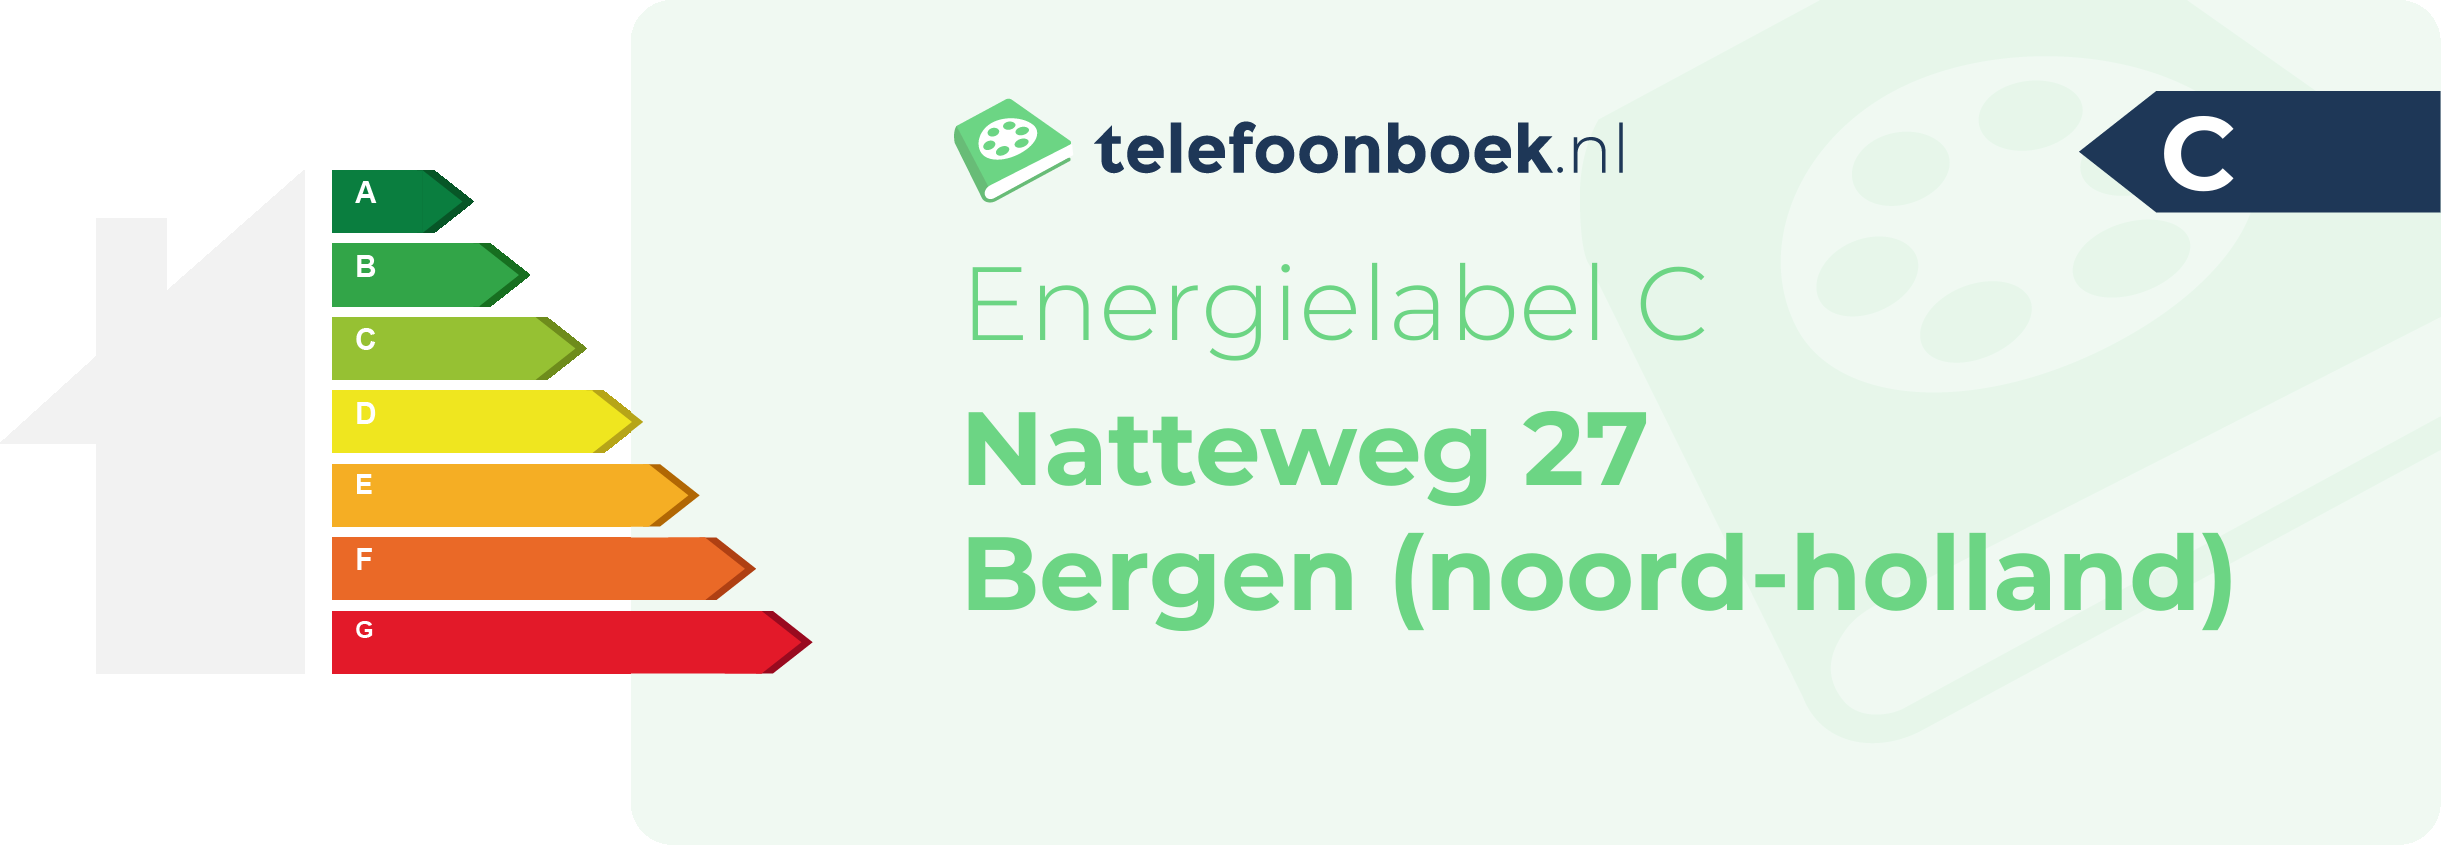 Energielabel Natteweg 27 Bergen (Noord-Holland)